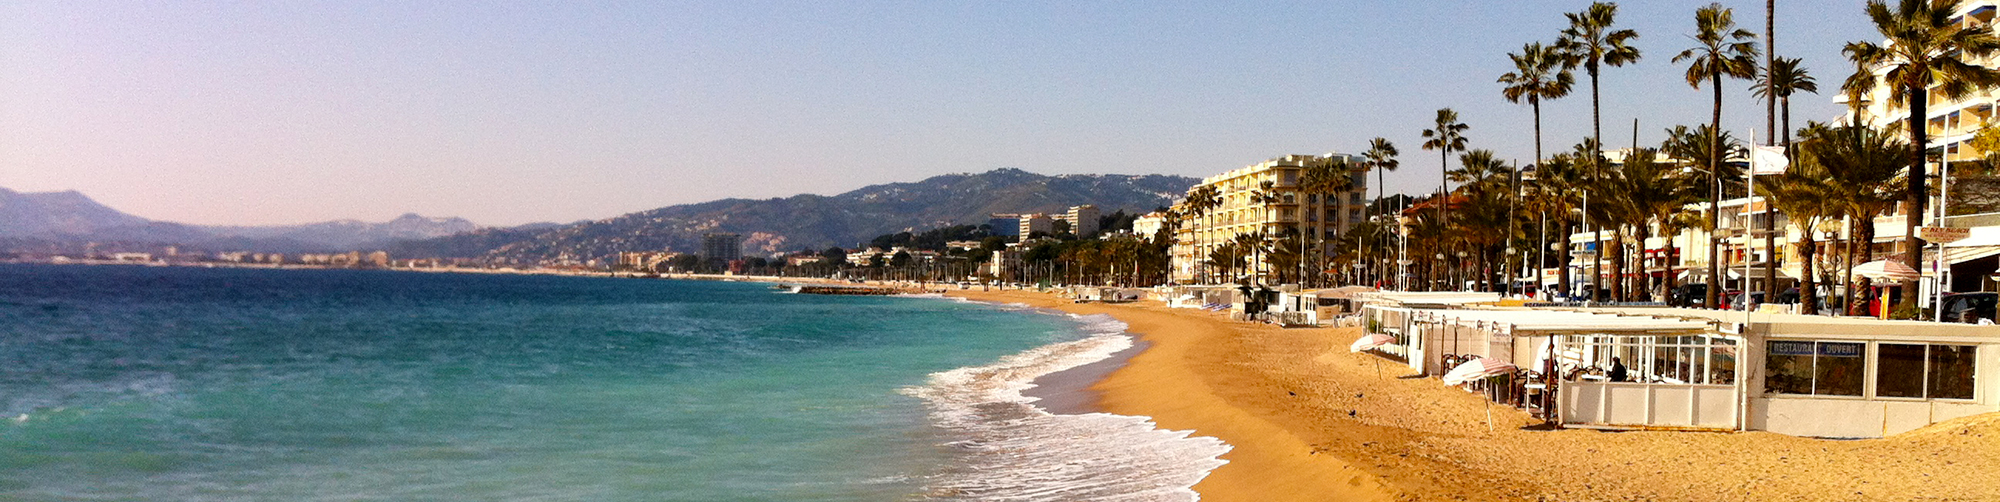 Midem: Cannes, France